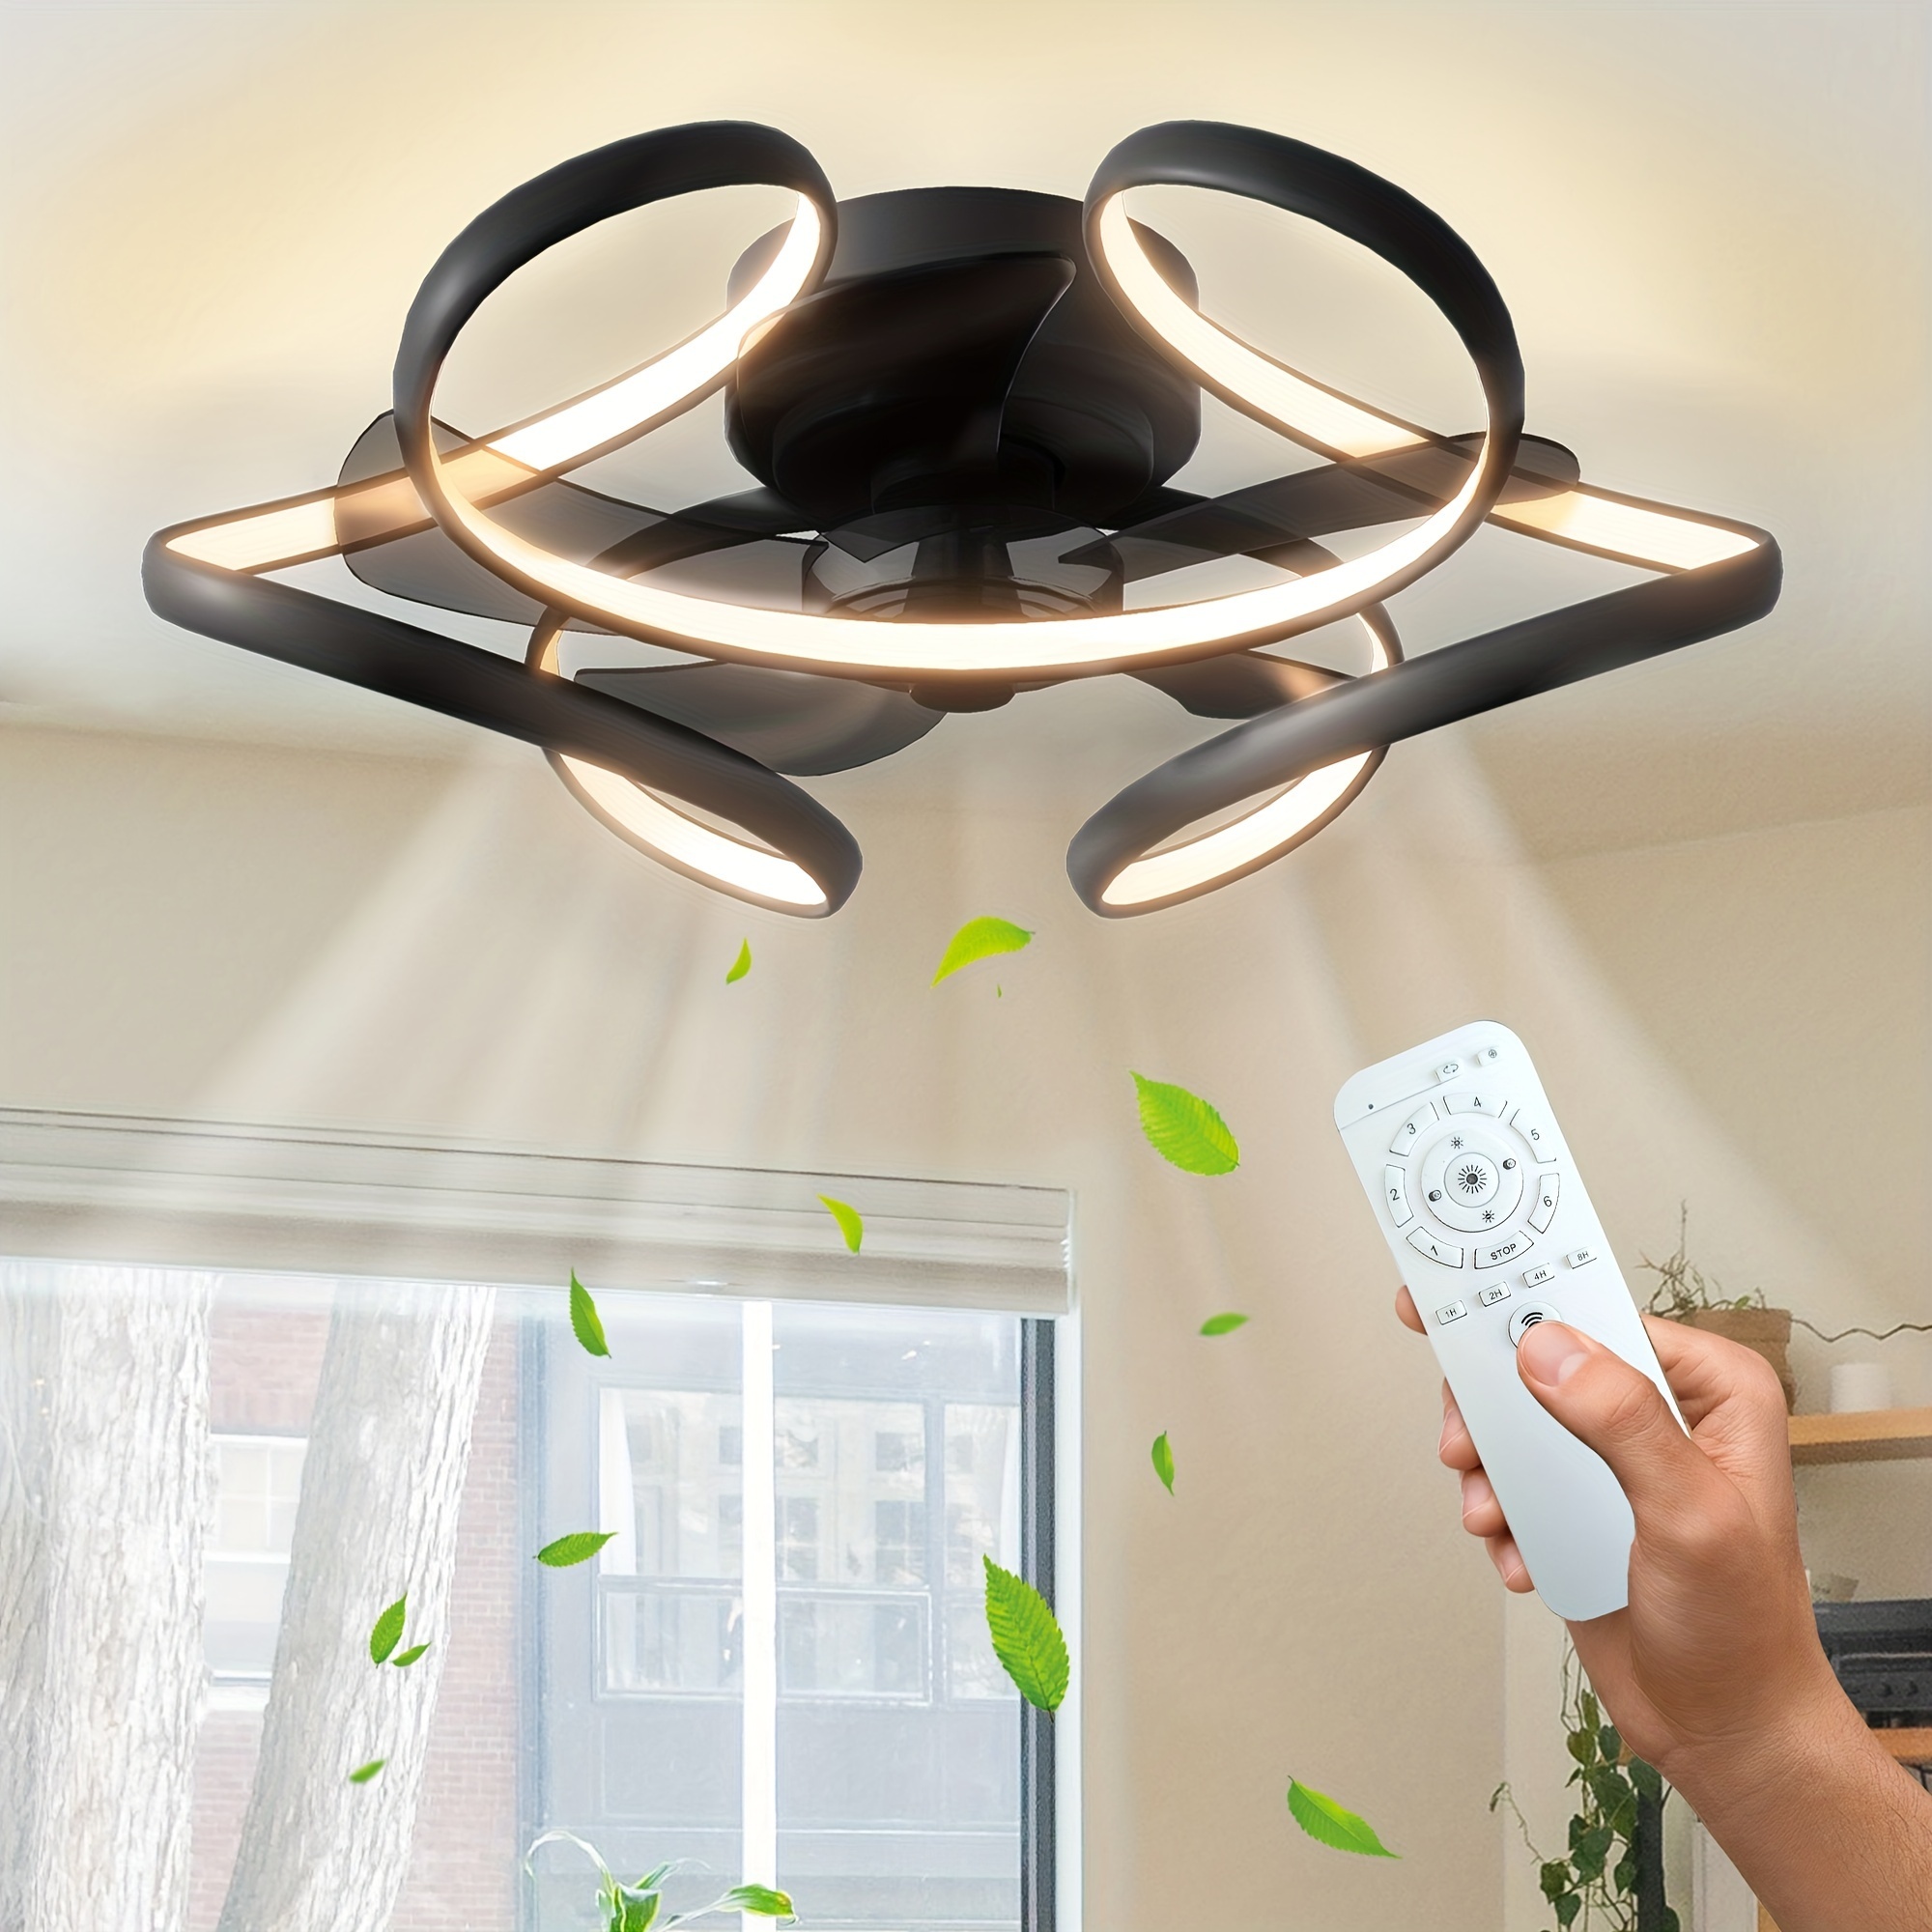 Lámpara de techo moderna con ventilador con control remoto, cuchillas  retráctiles, iluminación de 3 colores, lámpara de araña de 3 velocidades,  hoja